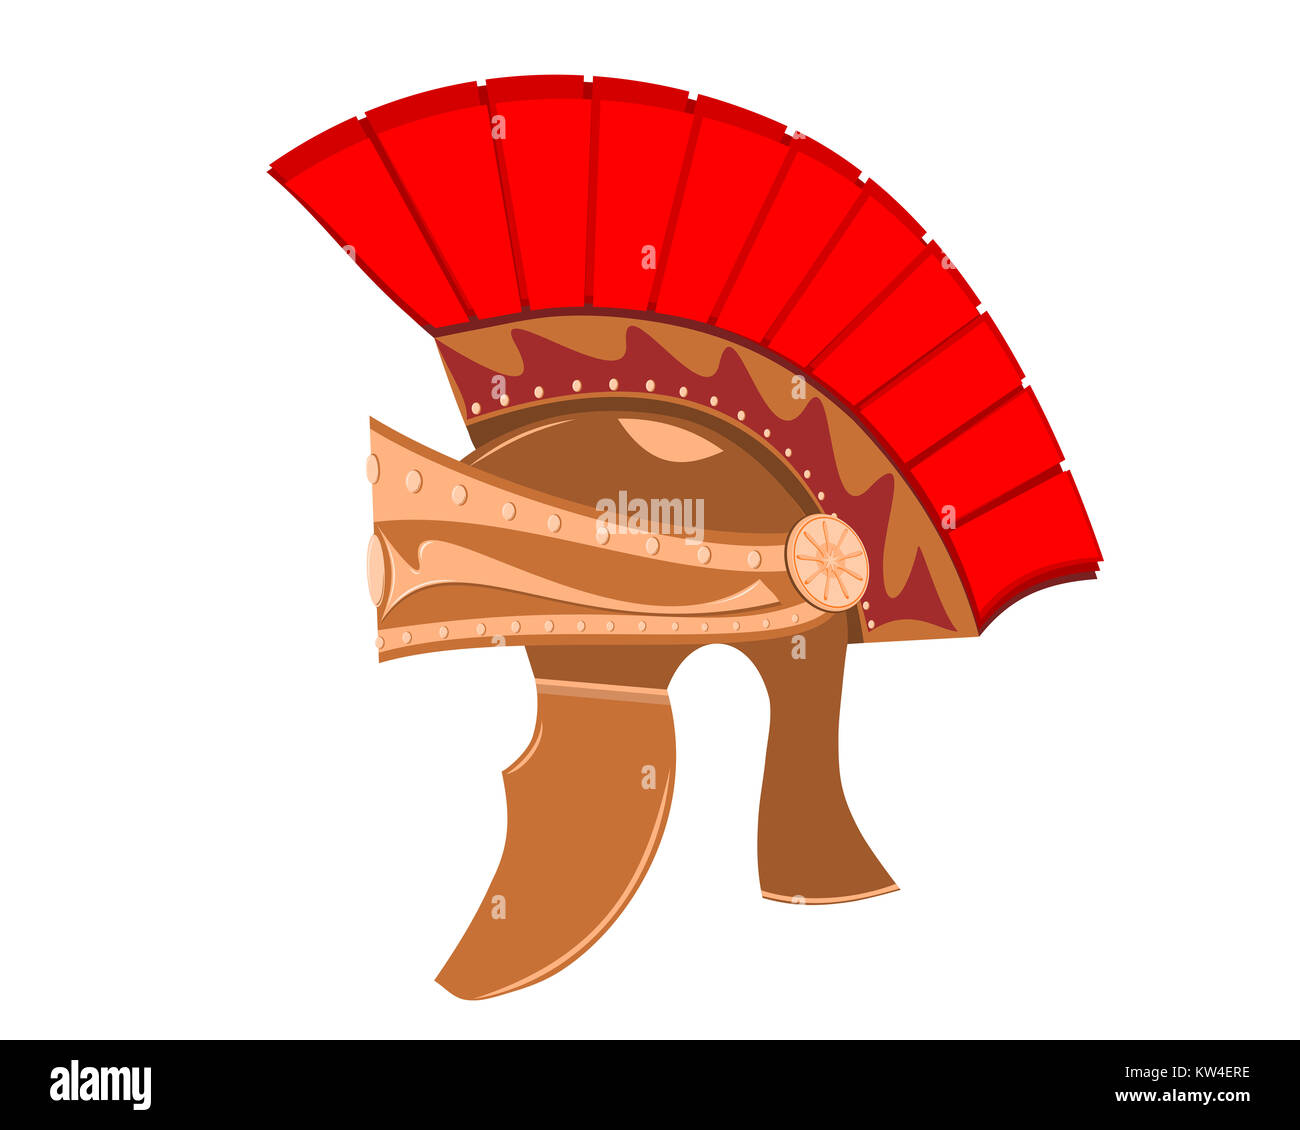 Ancient roman helmet of type galea generic illustration Stock Photo